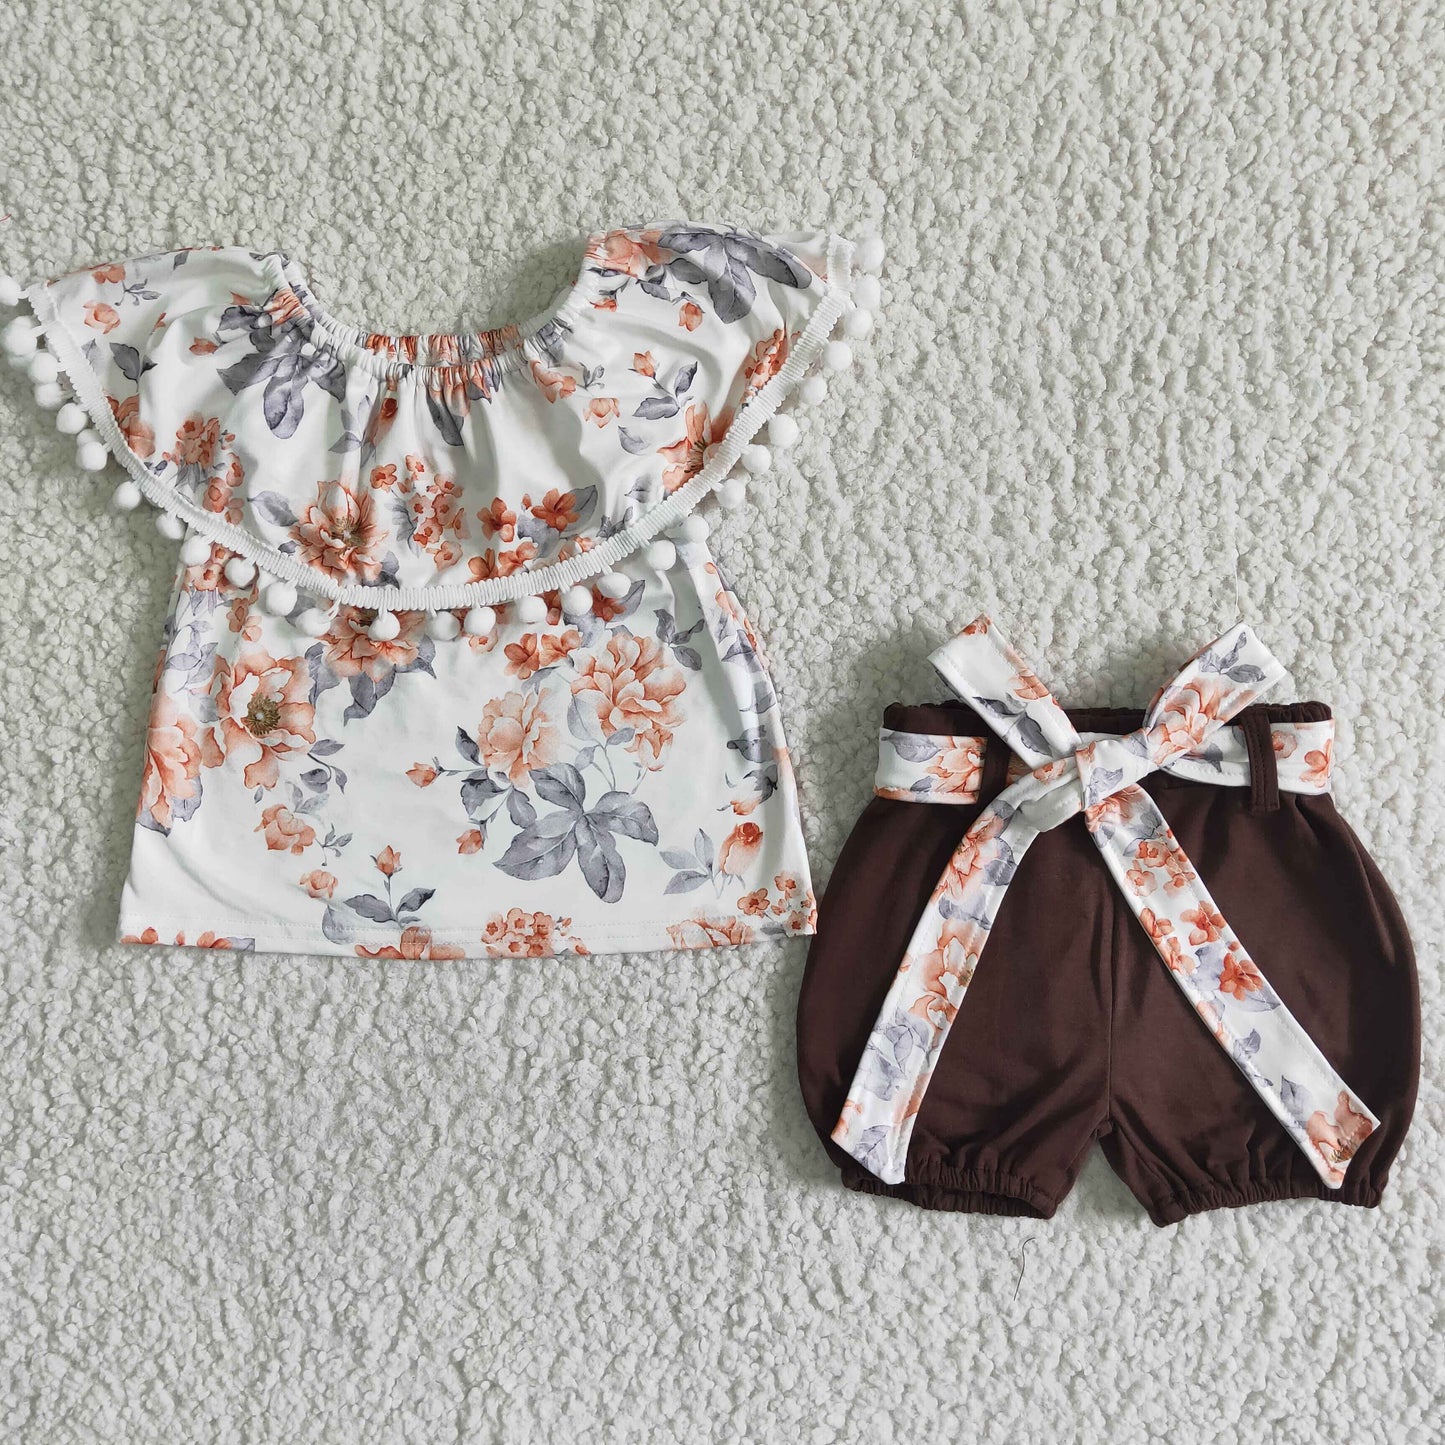 Floral shirt brown shorts baby girls summer clothing